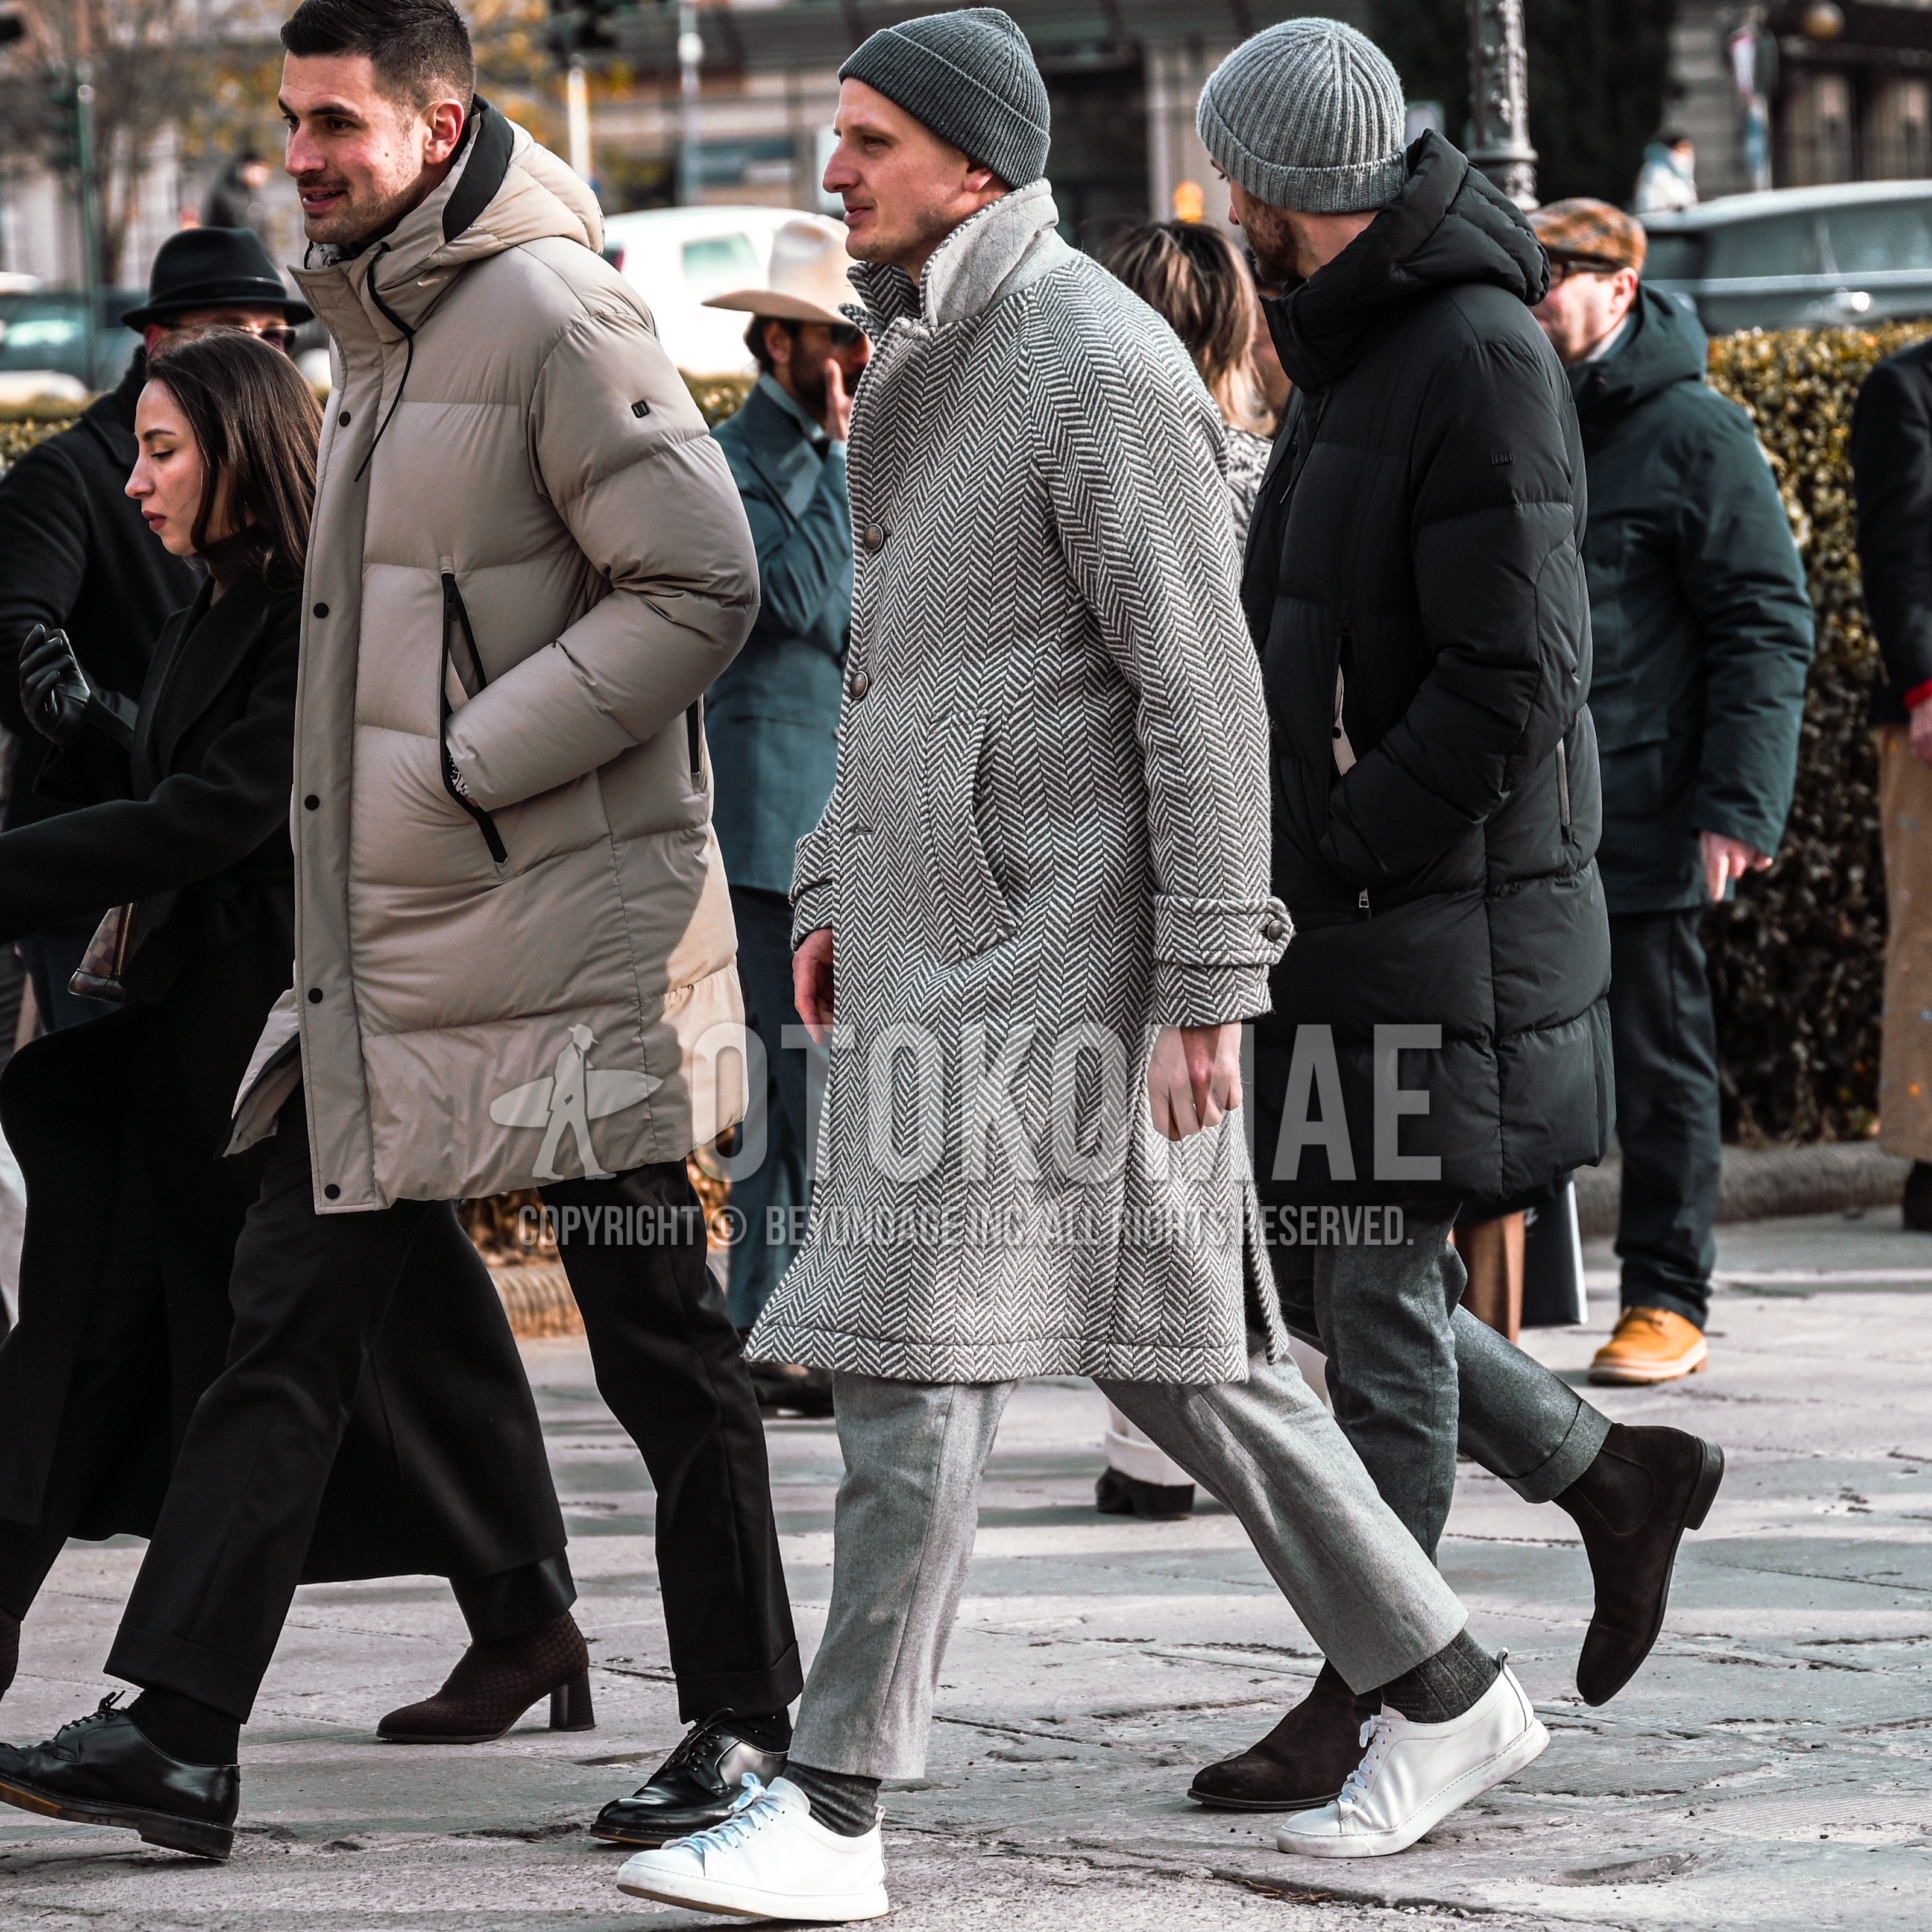 Men's autumn winter outfit with dark gray plain knit cap, gray herringbone chester coat, gray plain ankle pants, dark gray plain socks, white low-cut sneakers.